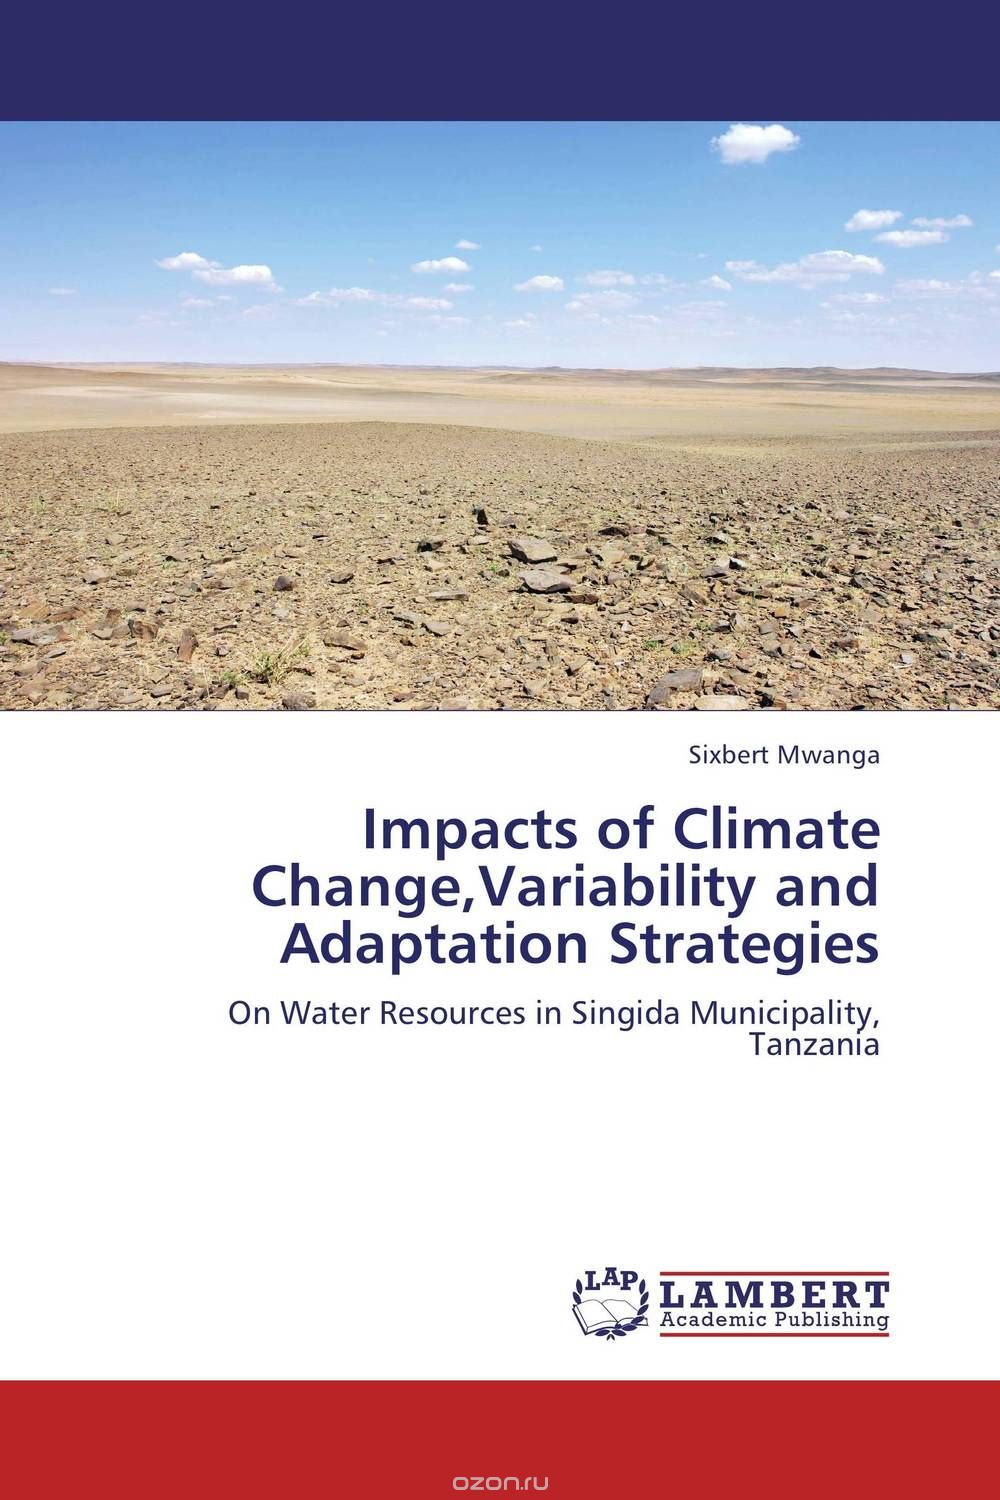 Скачать книгу "Impacts of Climate Change,Variability and Adaptation Strategies"